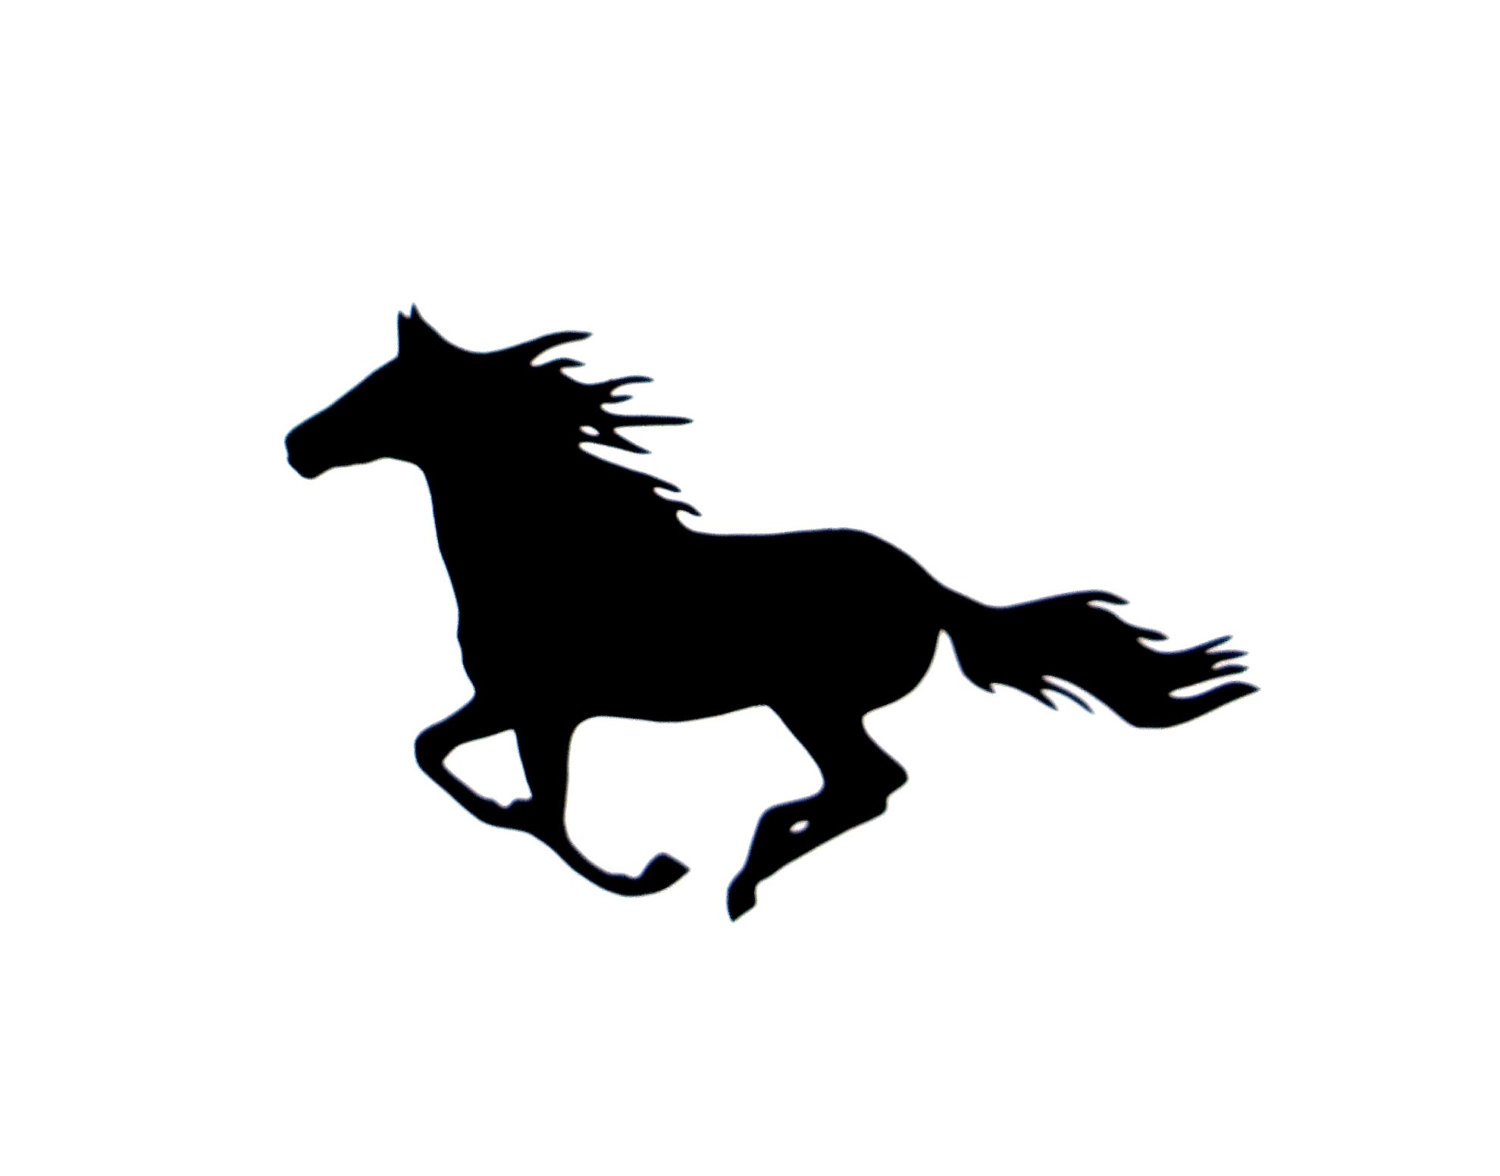 Western Pleasure Horse Silhouette Clipart   Free Clip Art Images